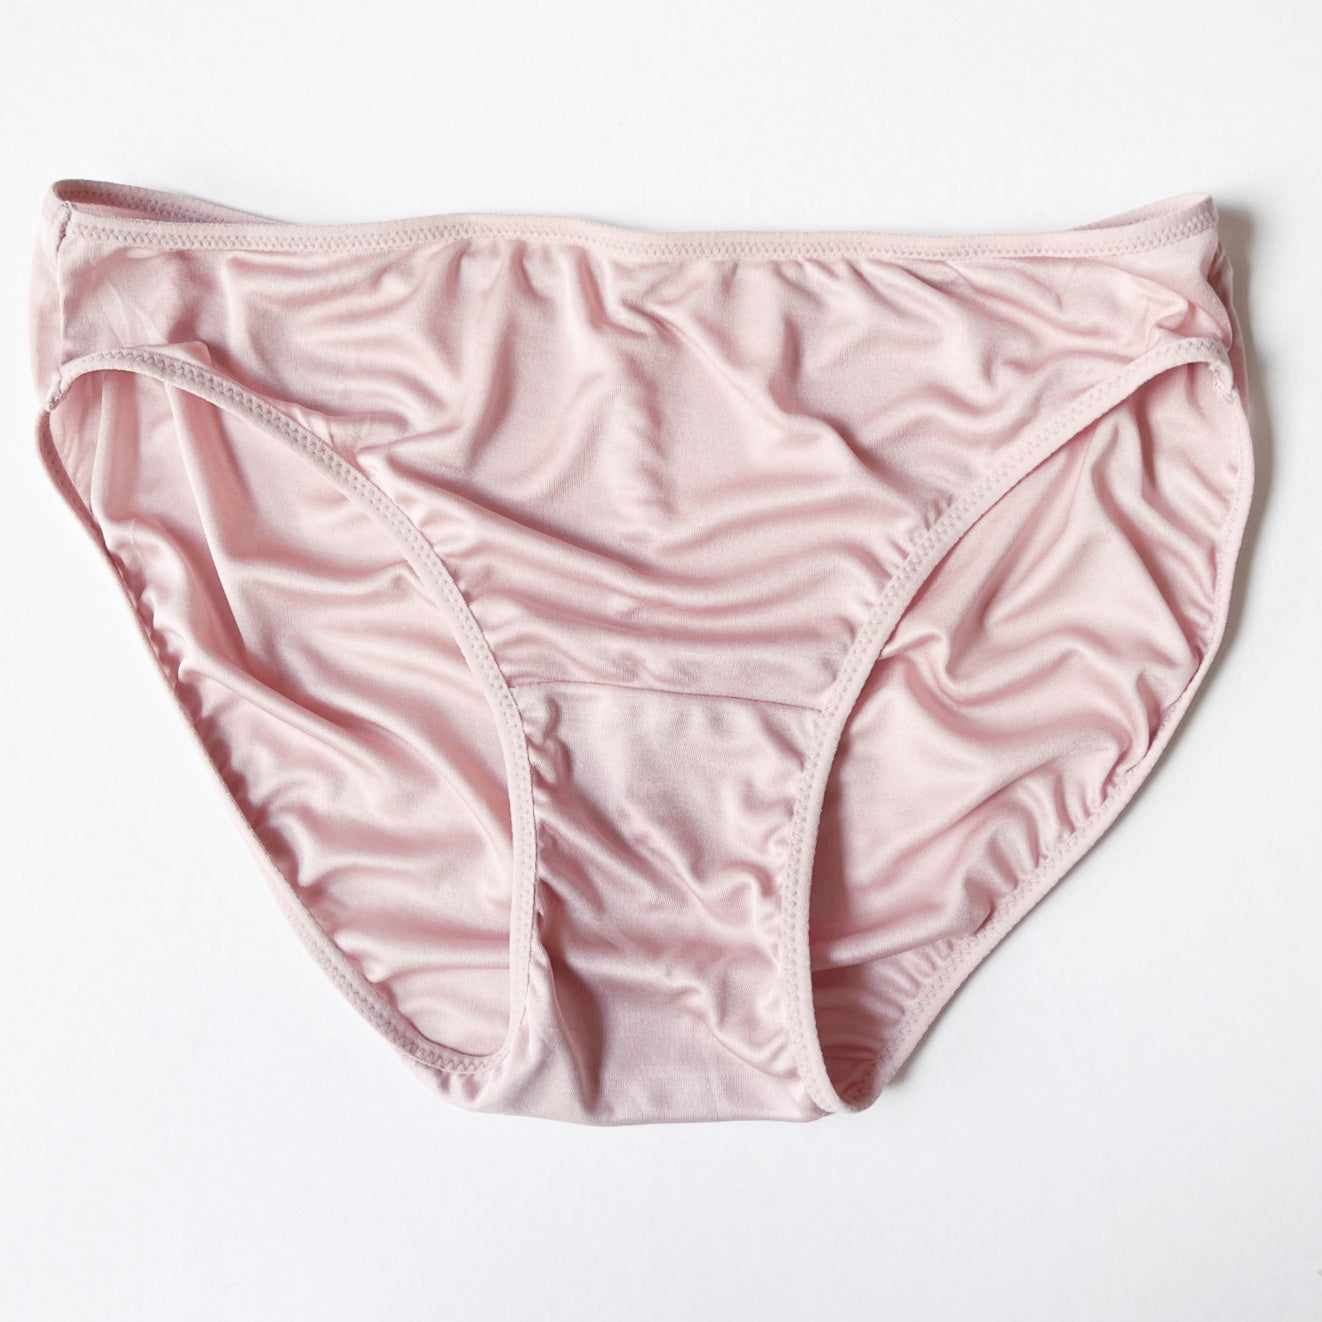 Rose silk panties for women | Made in Canada lingerie 